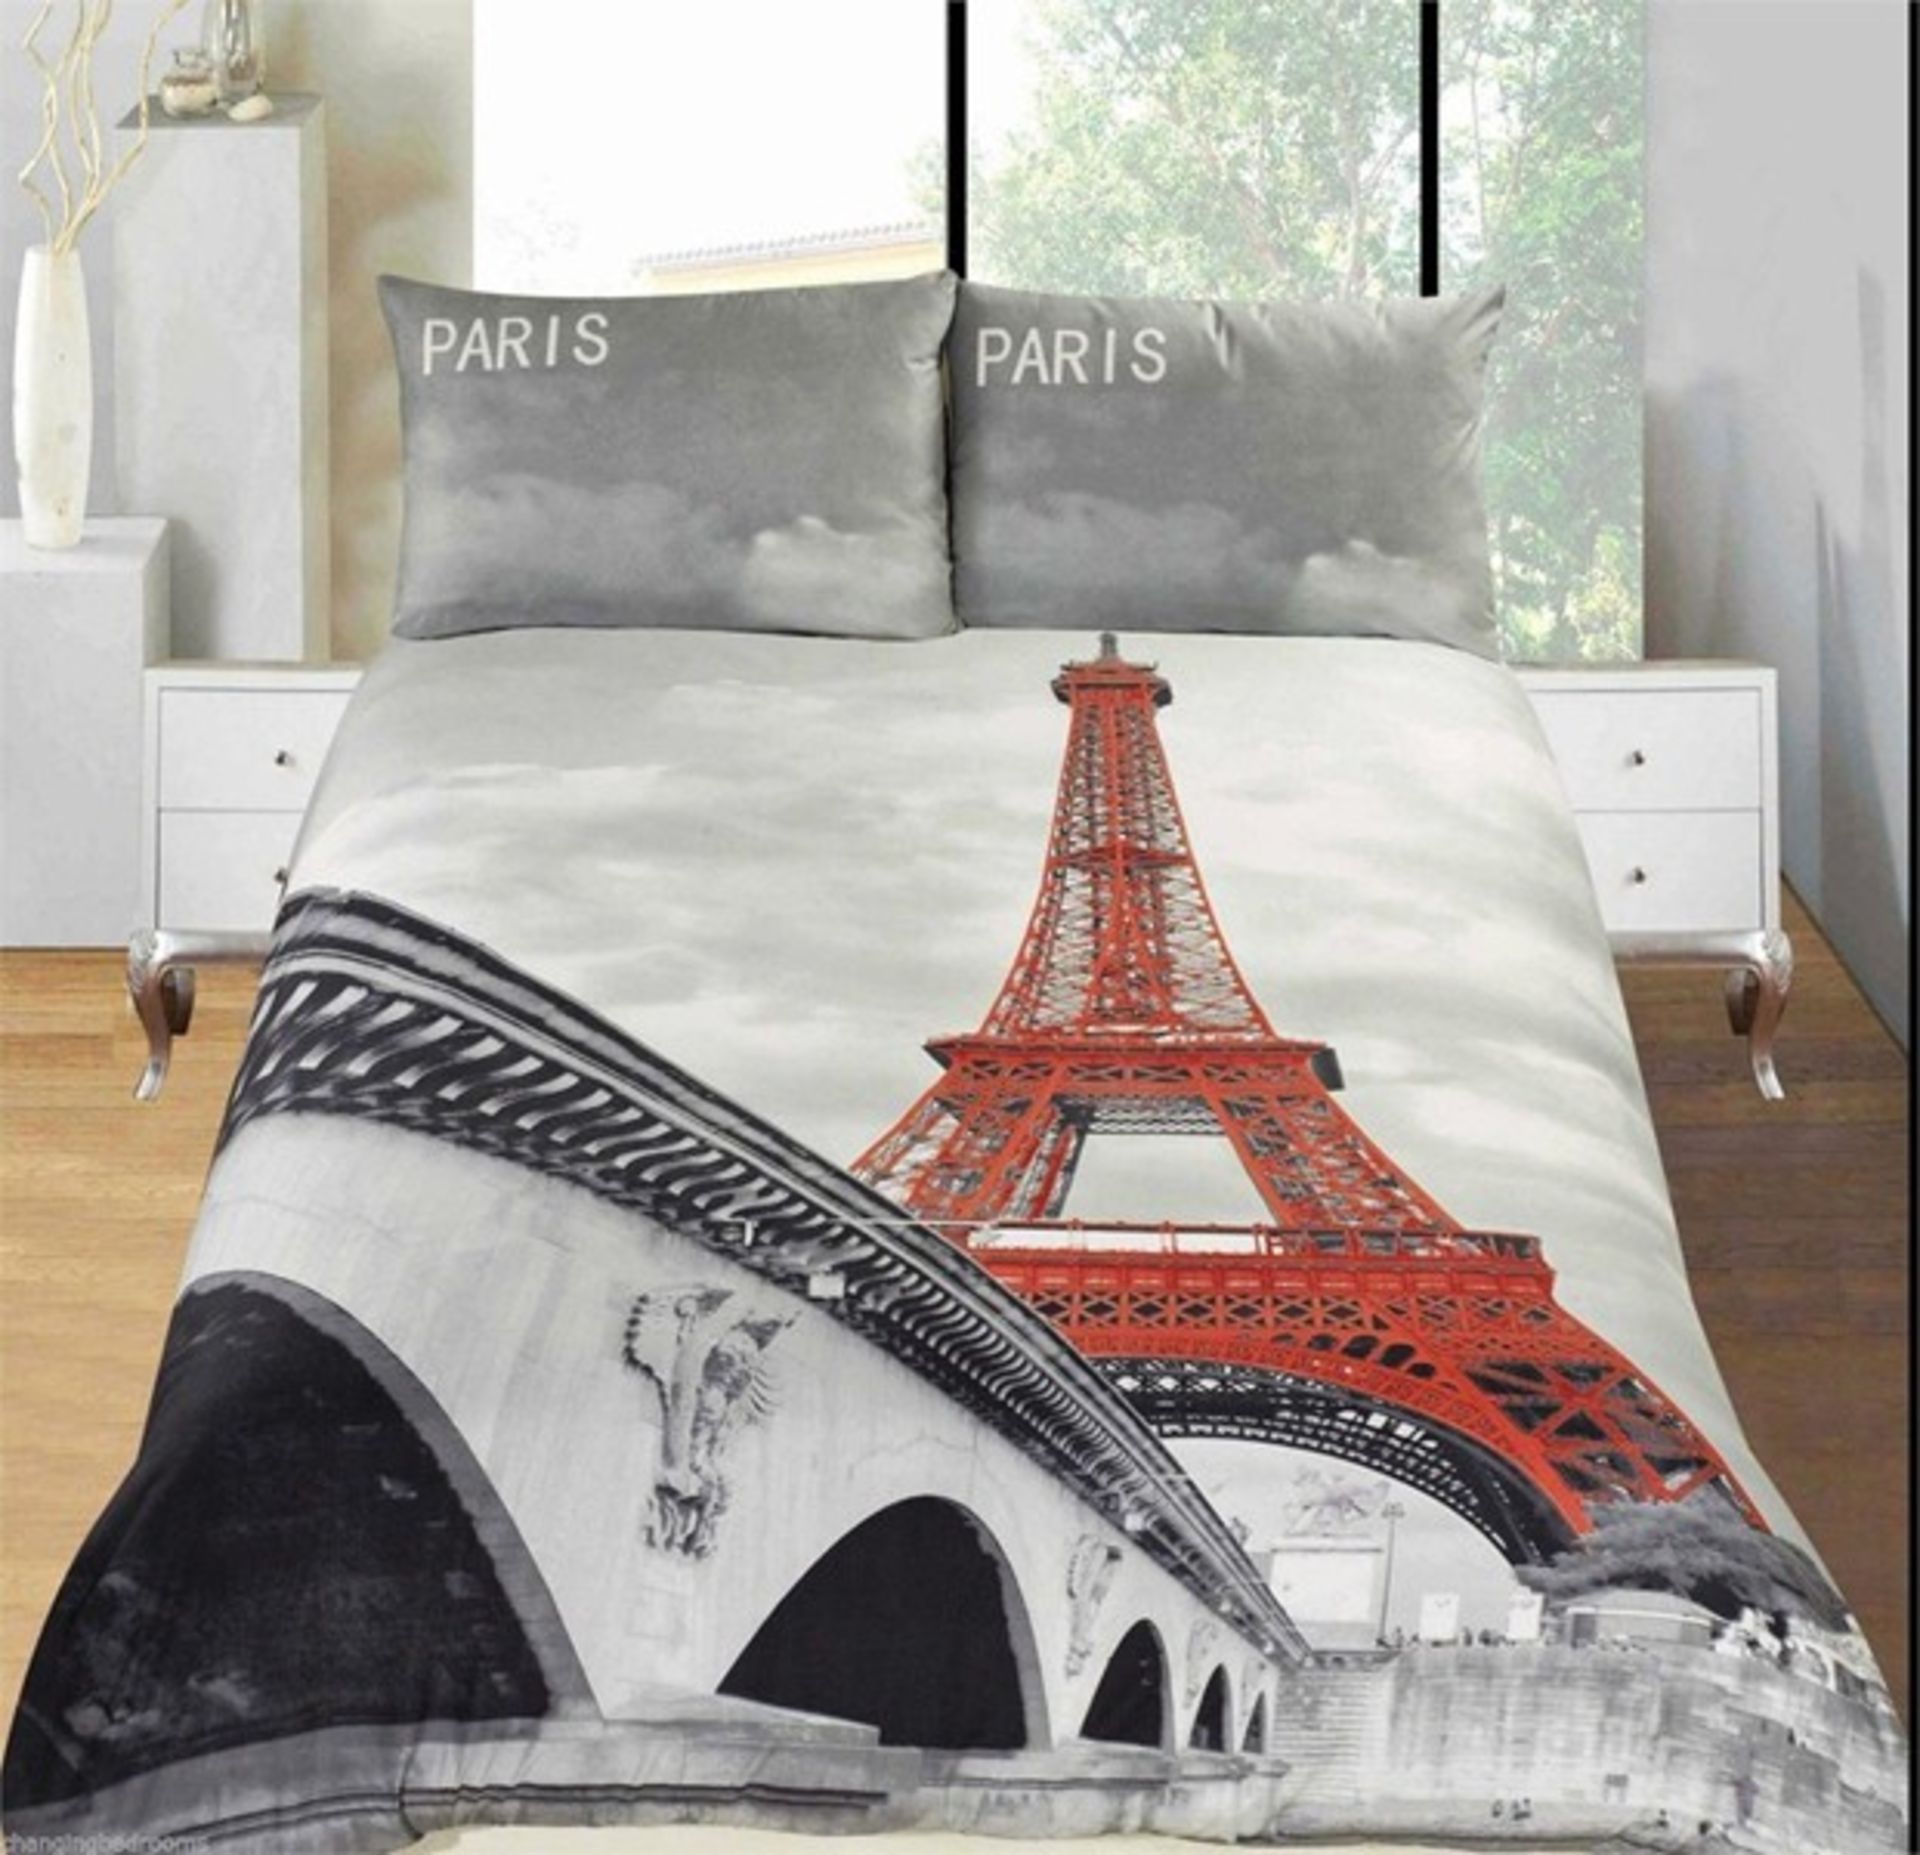 V Brand New Double Bed Luxury Three Piece Duvet Set-Eifel Tower X 2 YOUR BID PRICE TO BE